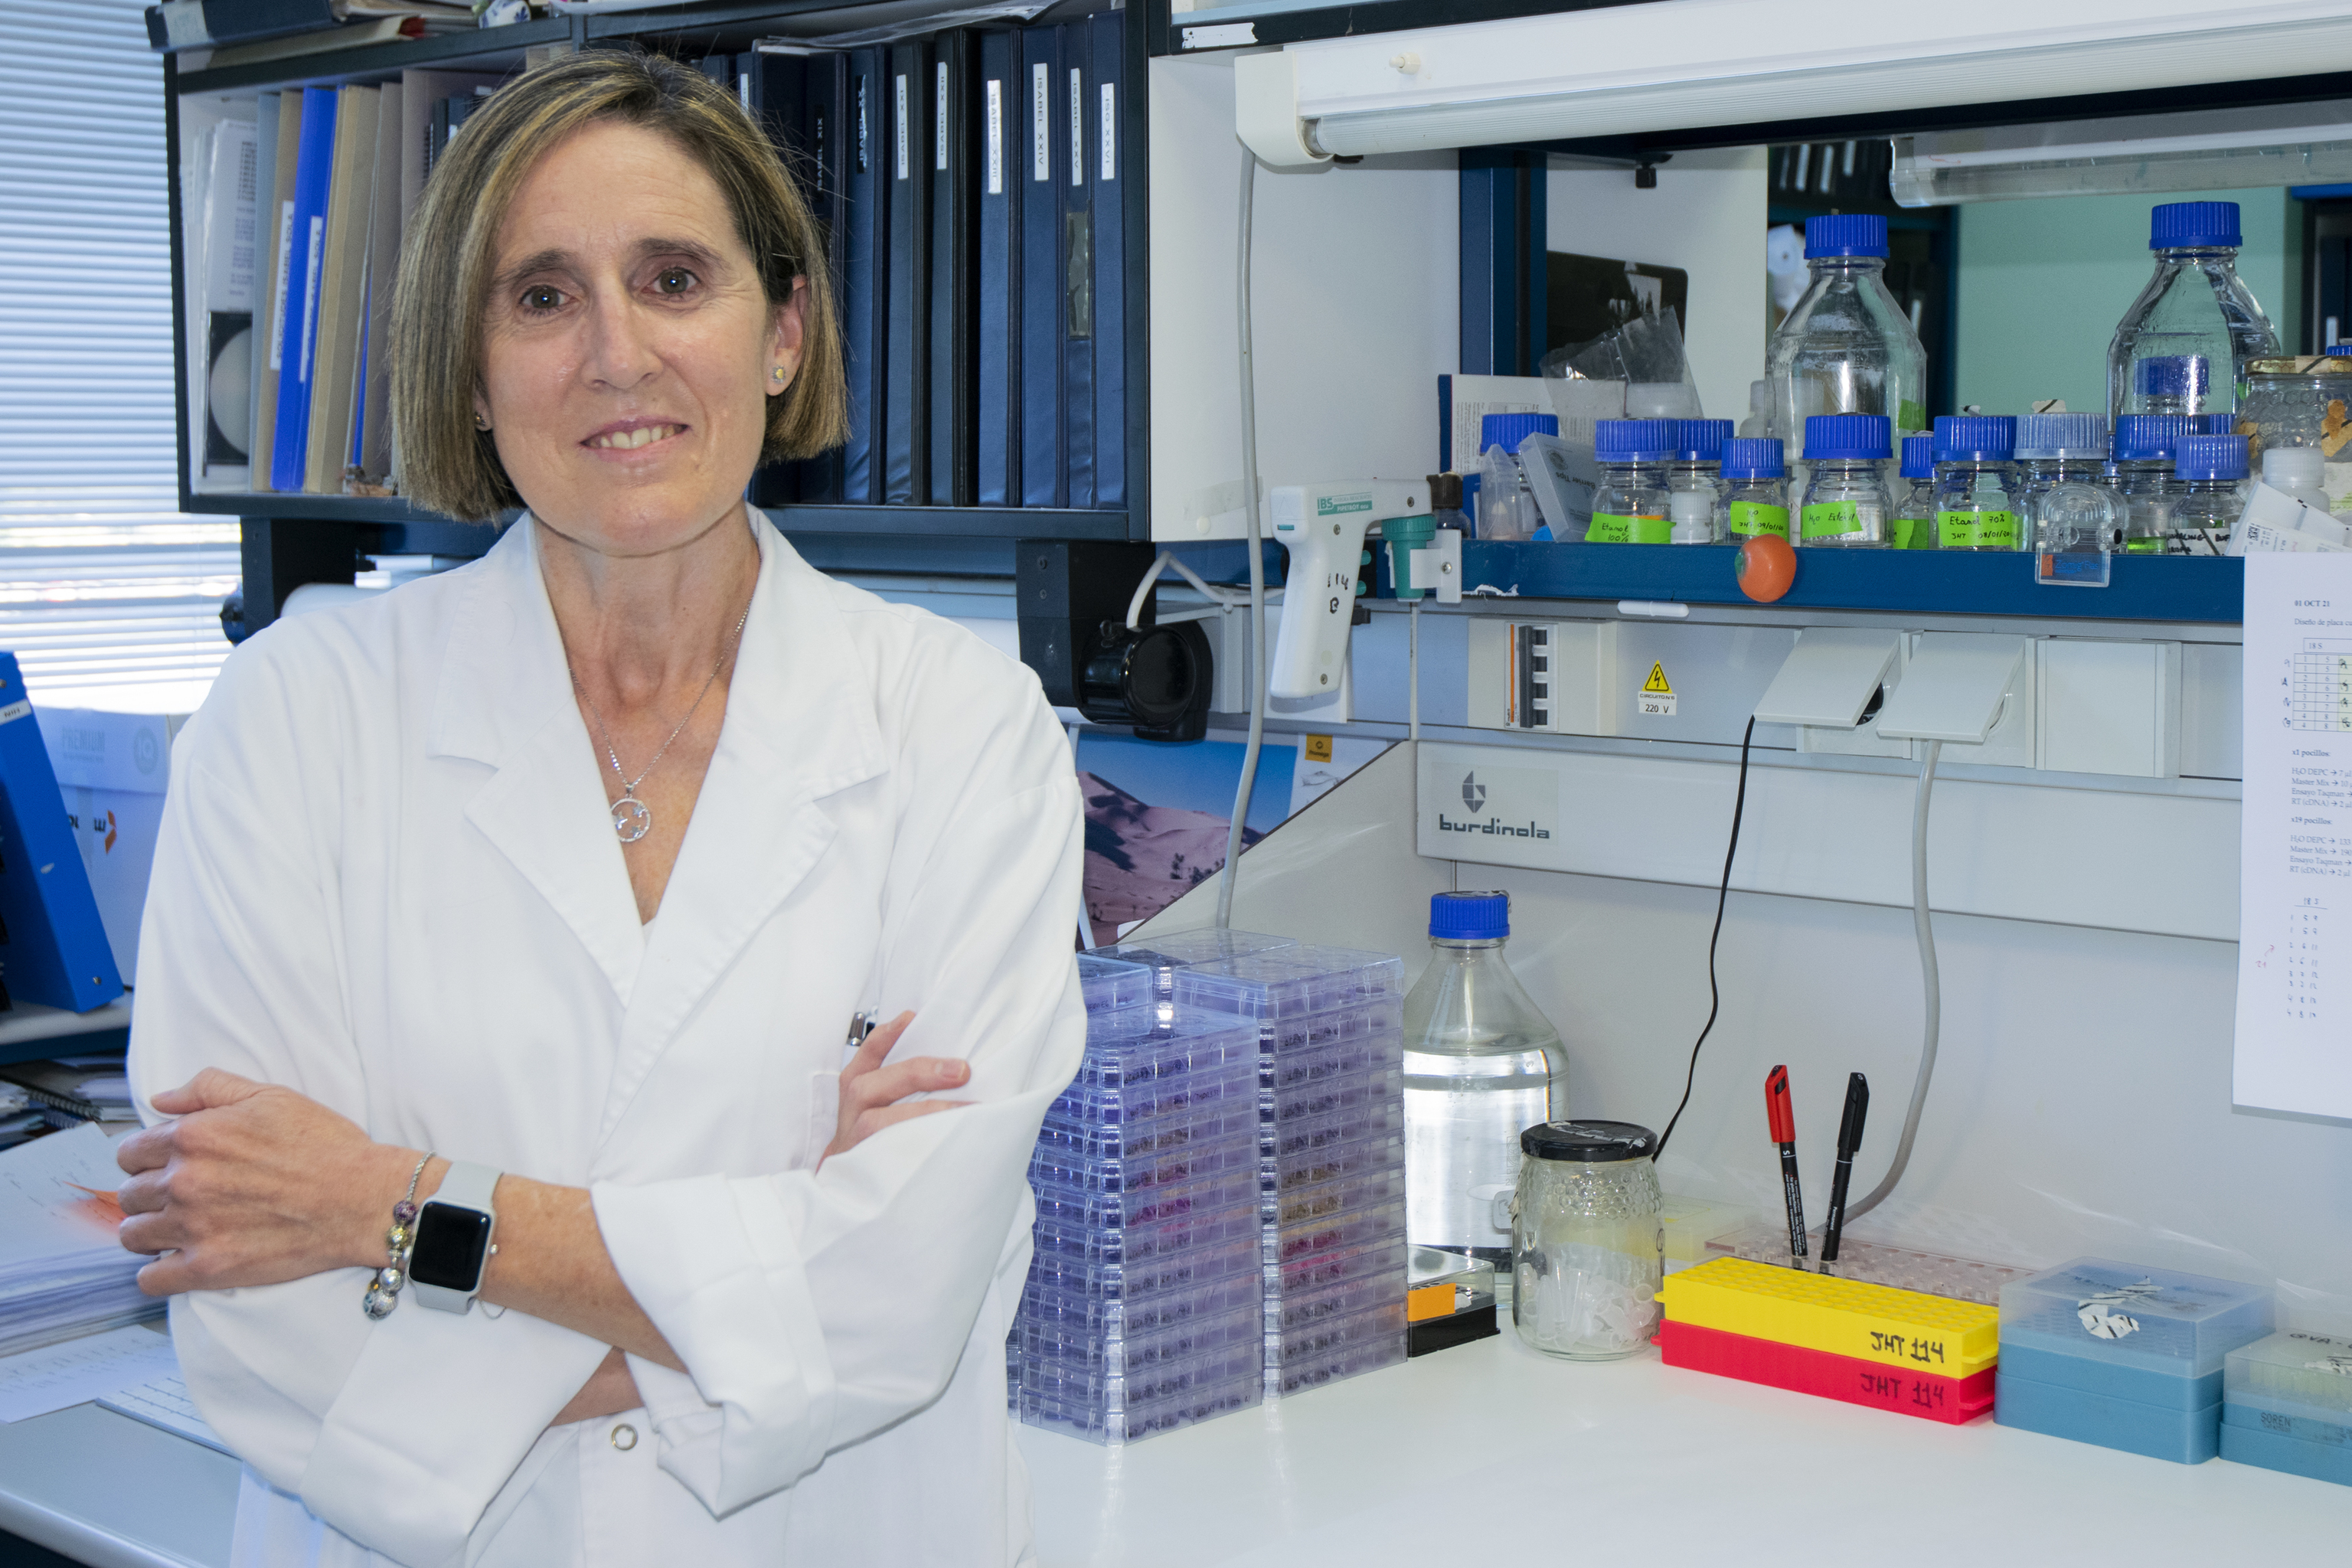 Isabel Sola Gurpegui, biloga espaola experta en coronavirus y coinventora de tres patentes.